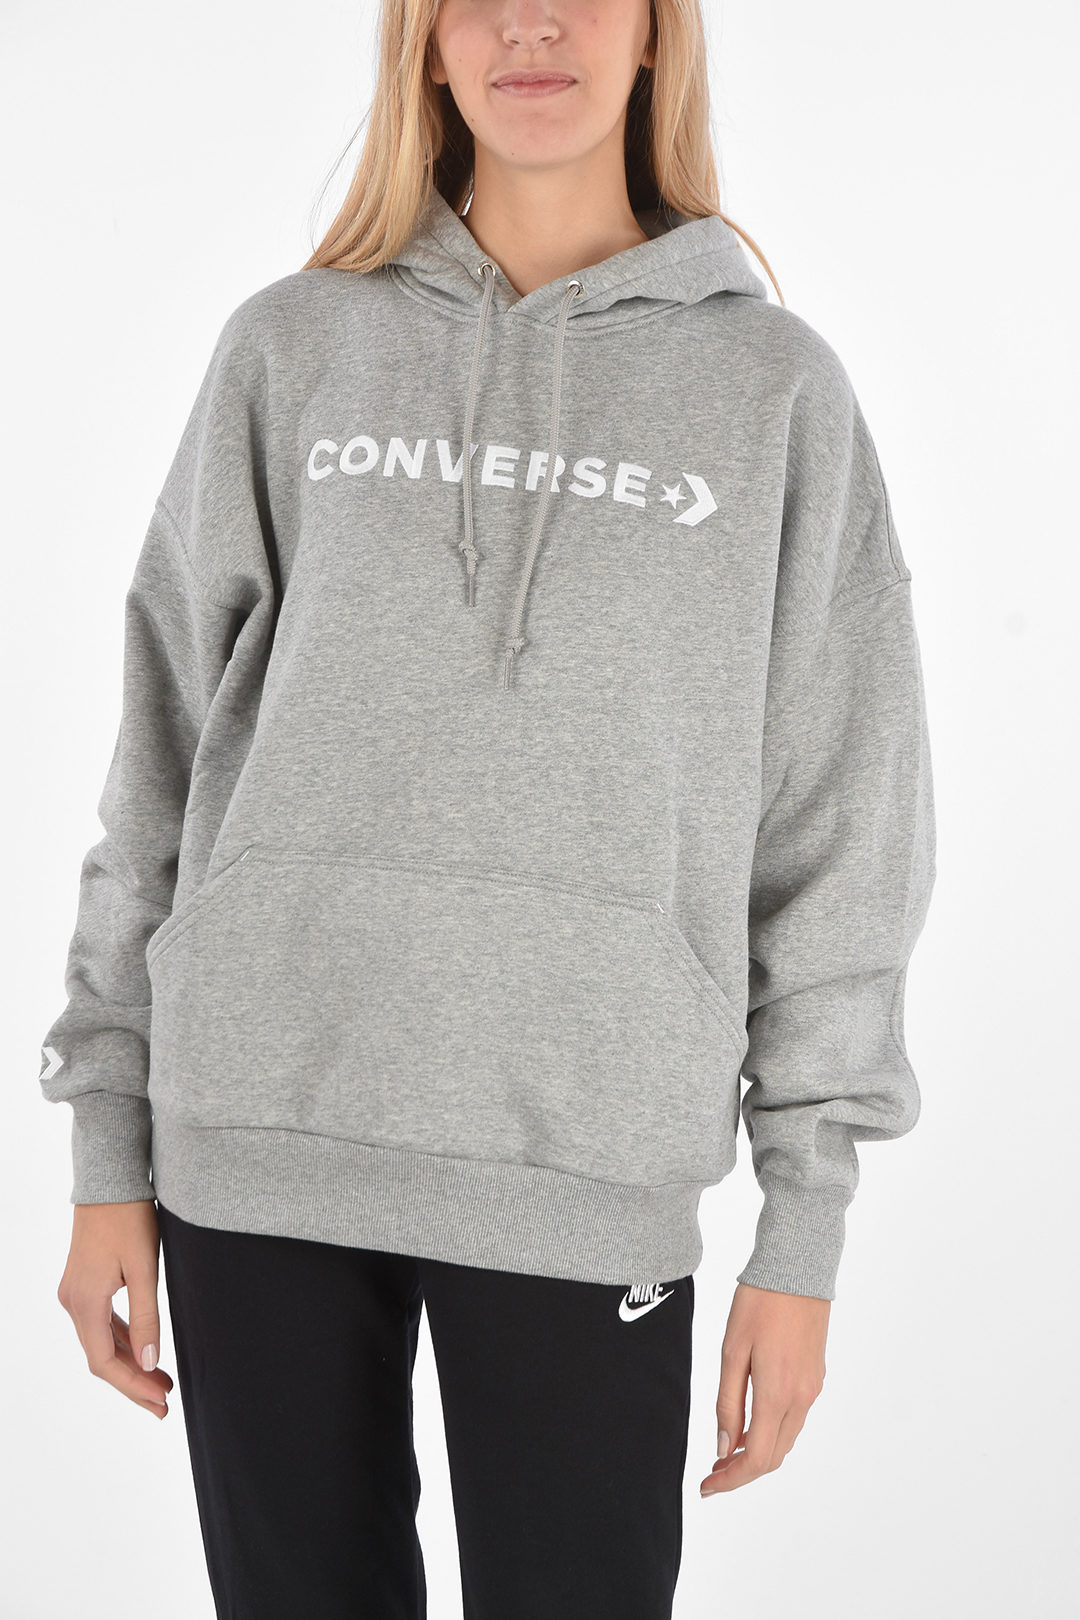 Converse Hoodie Emboroidered Sweatshirt women - Glamood Outlet